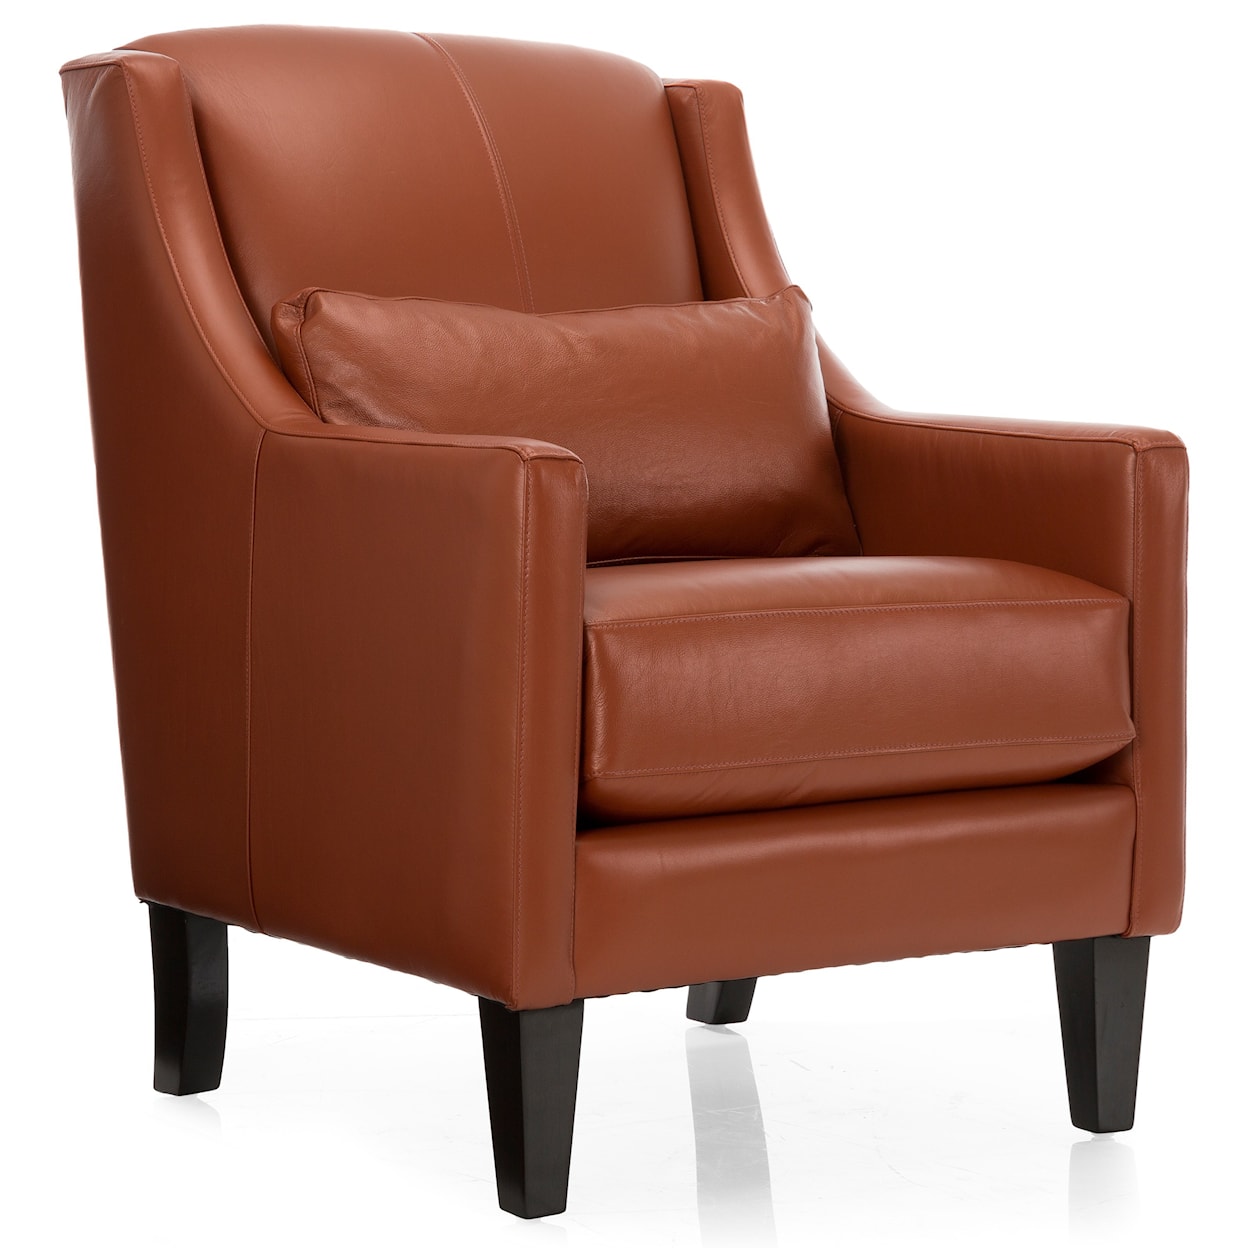 Decor-Rest 7606 Chair